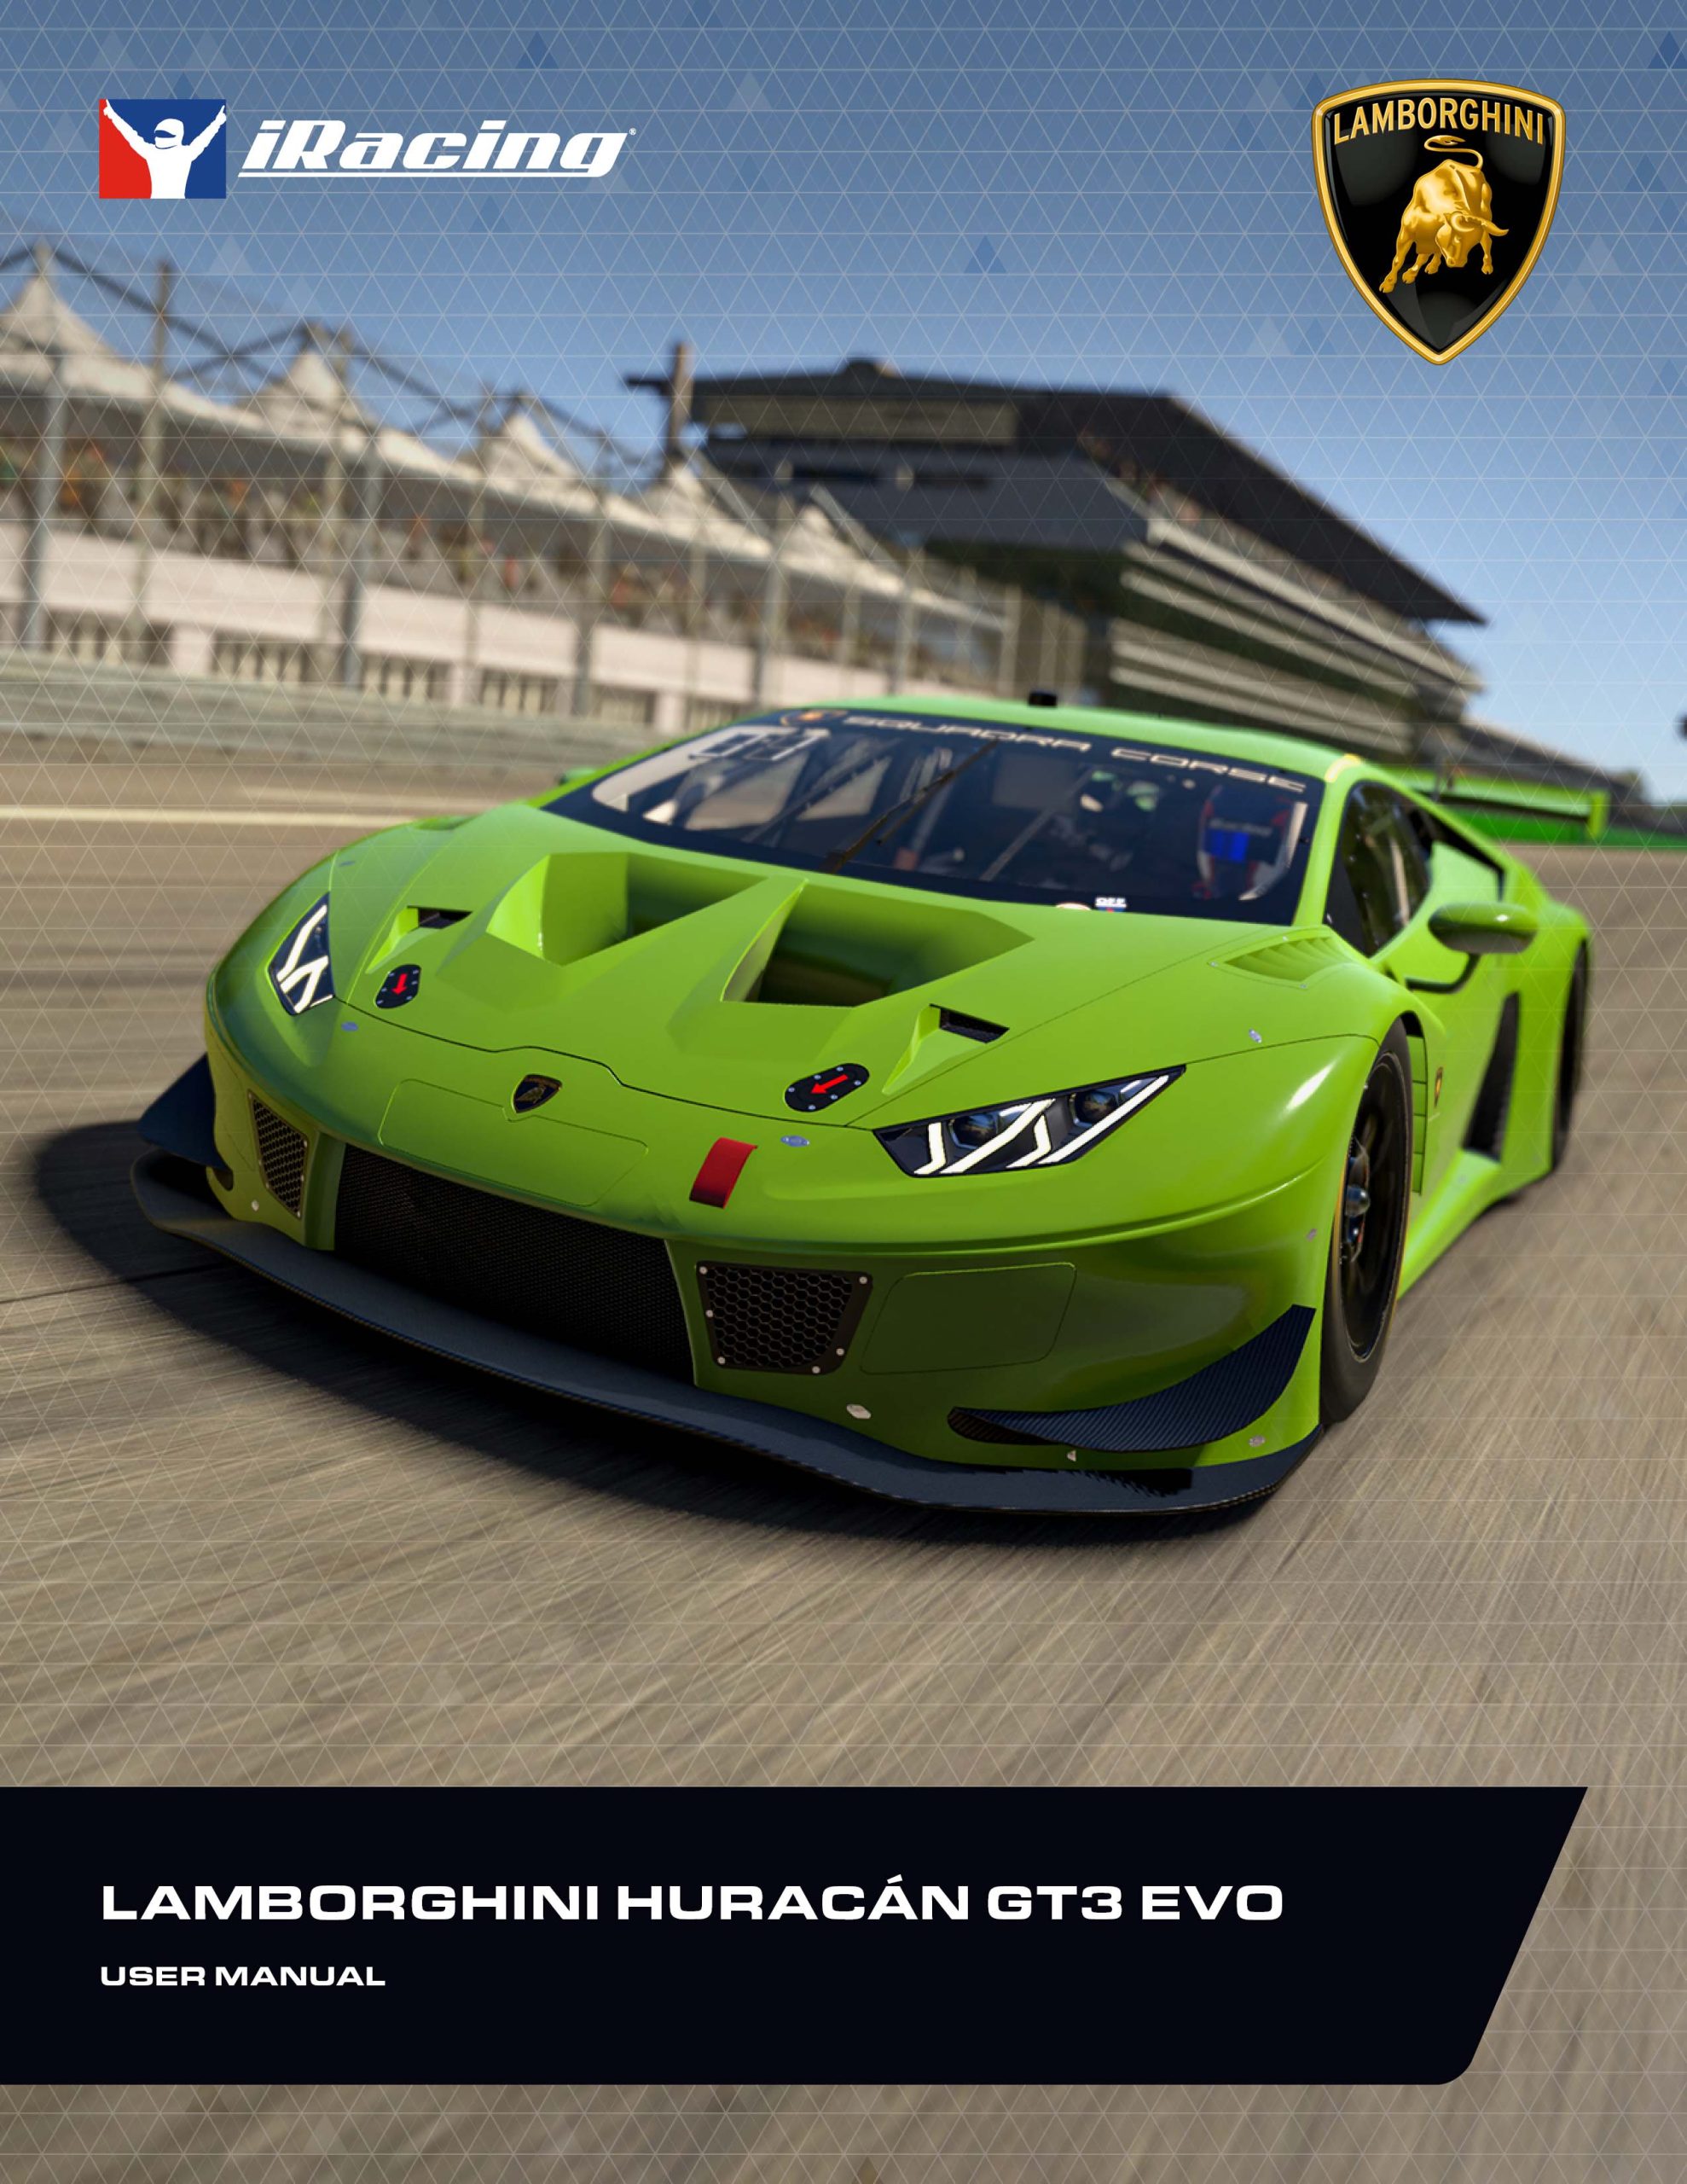 Lamborghini Huracan GT3 Evo User Manual